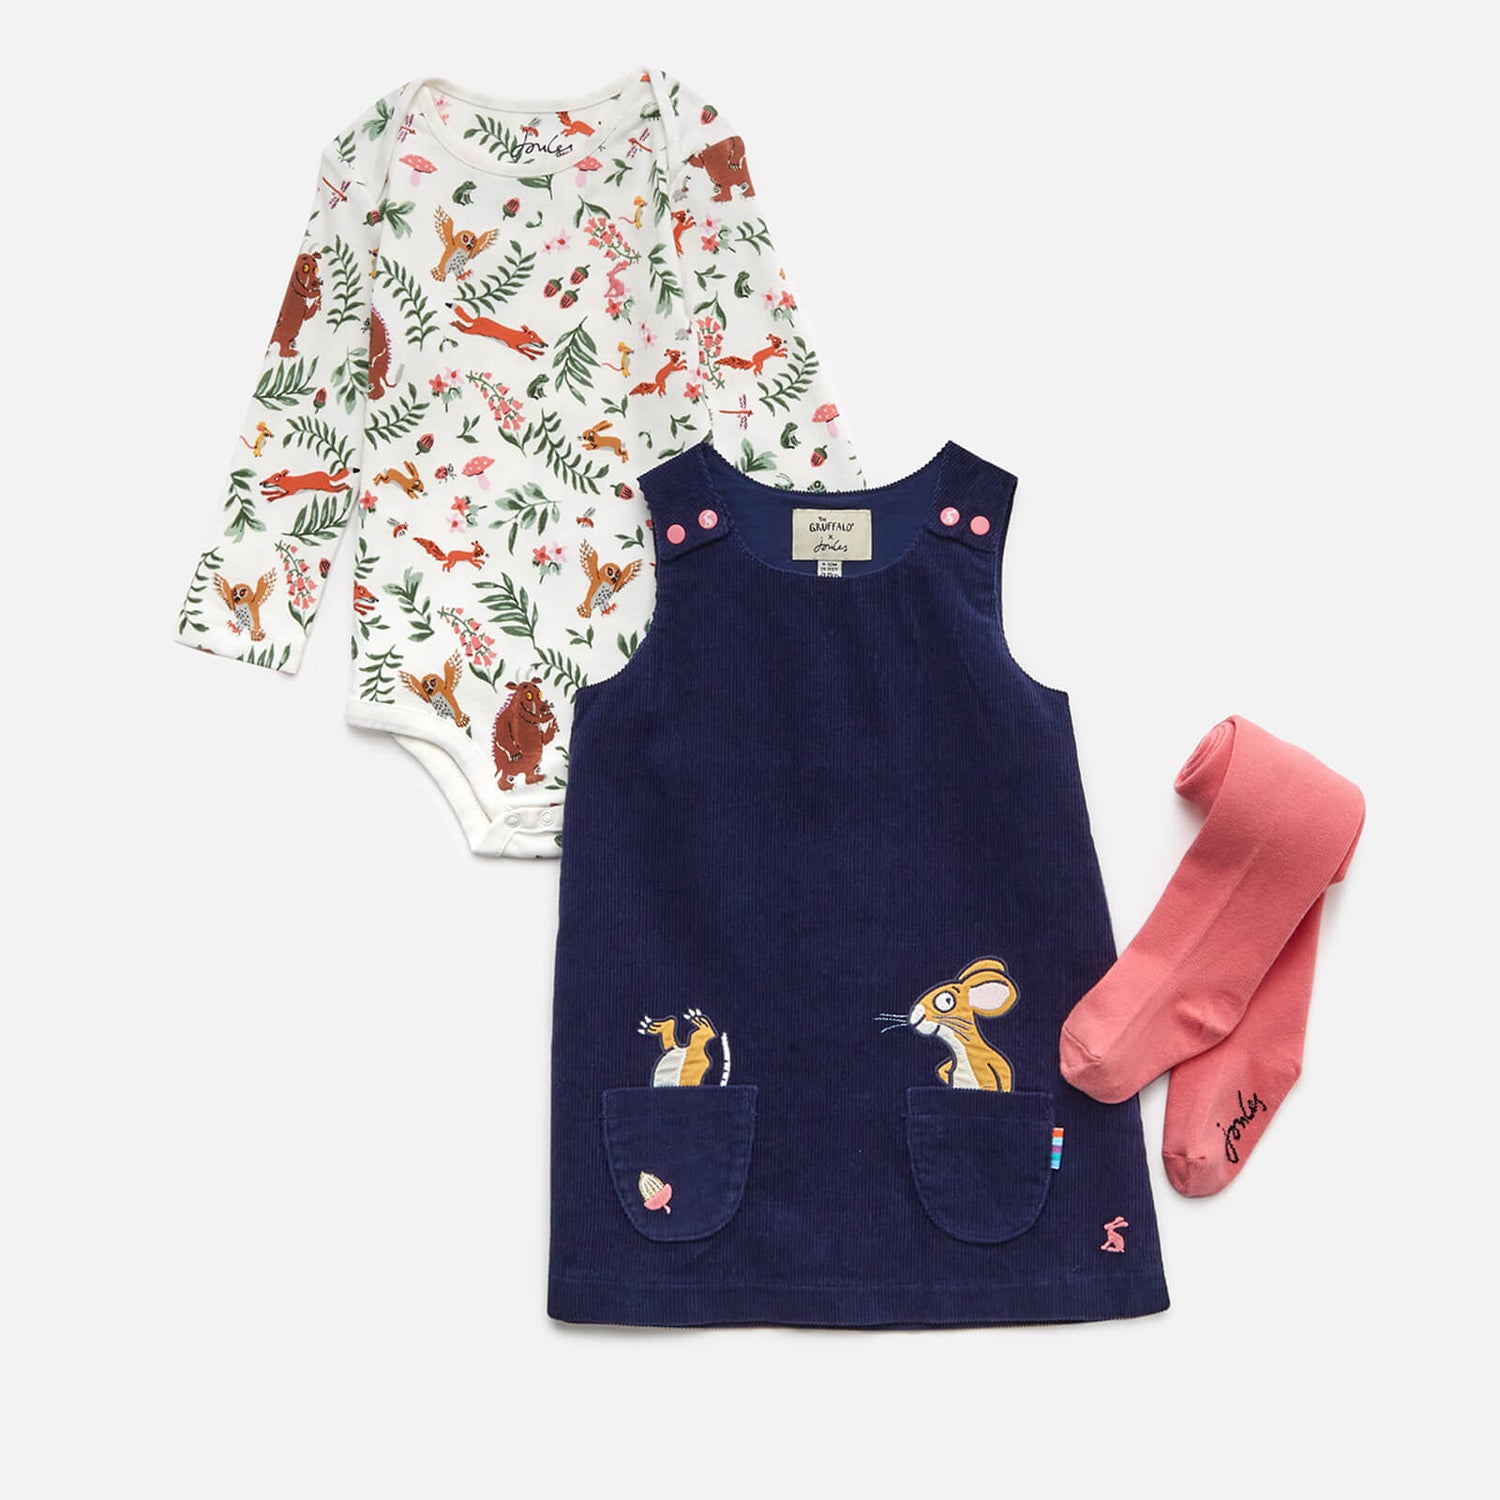 Joules Babys' Miya Pinafore Dress Set with Tights - Gruffalo Mouse Navy - 3-6 months